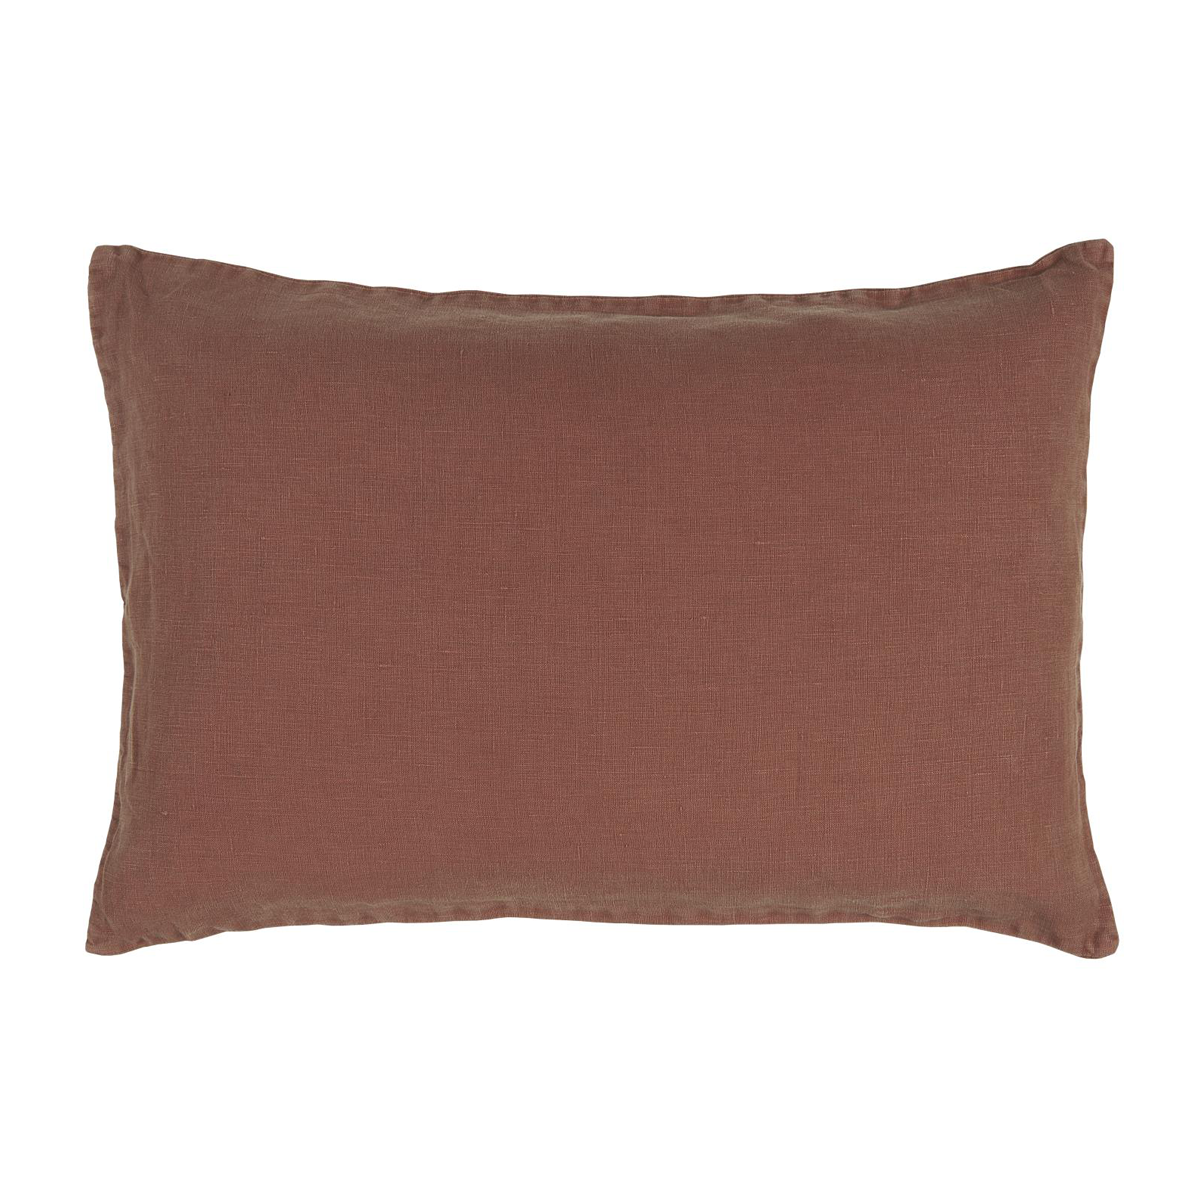 IB Laursen cushion in Rust linen 60 x 40cm 6201-70